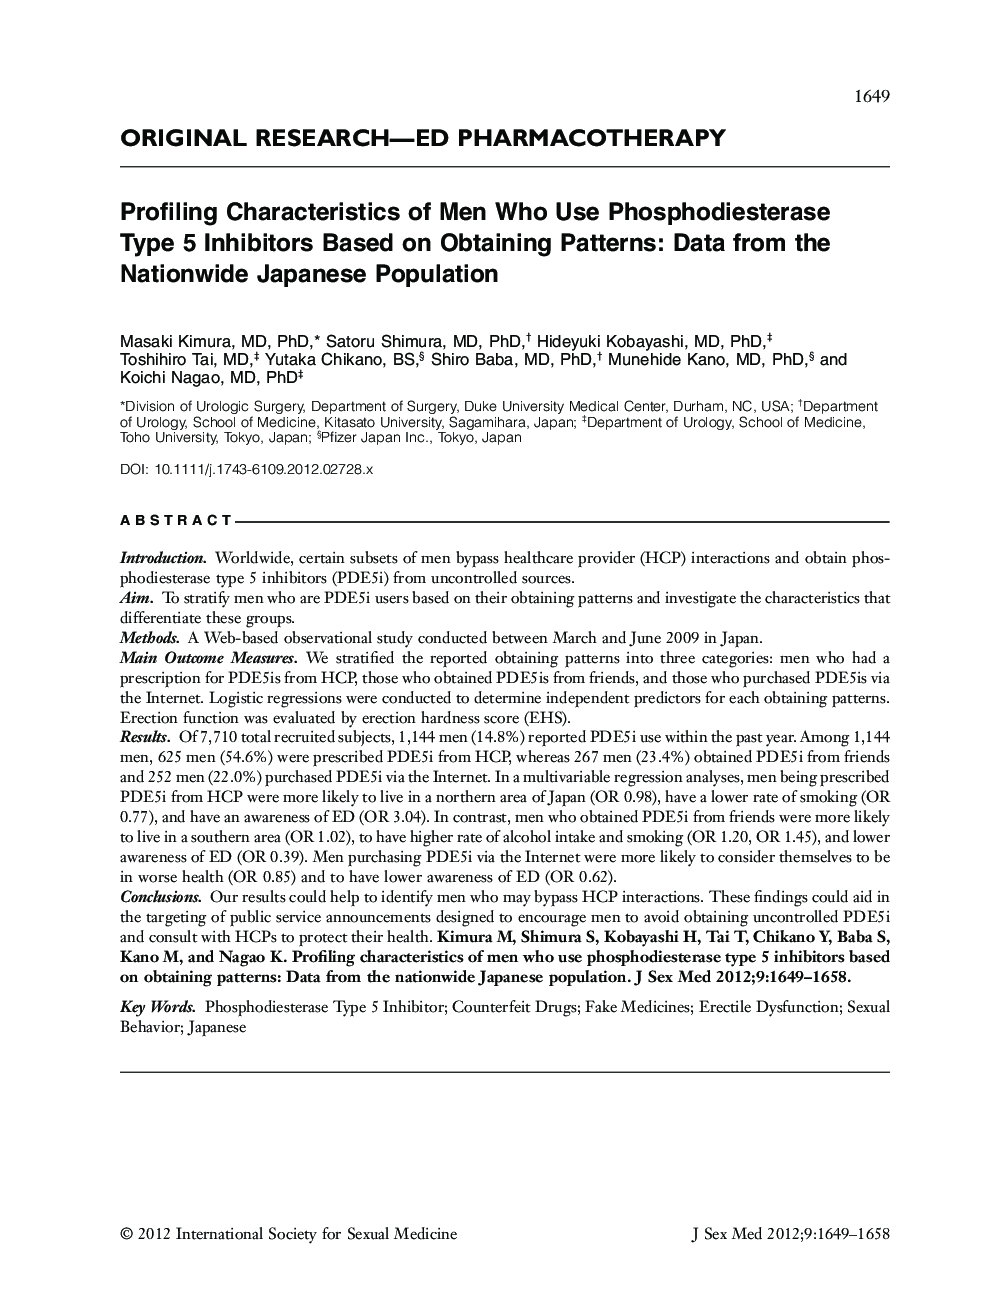 Profiling Characteristics of Men Who Use Phosphodiesterase Type 5 Inhibitors Based on Obtaining Patterns: Data from the Nationwide Japanese Population